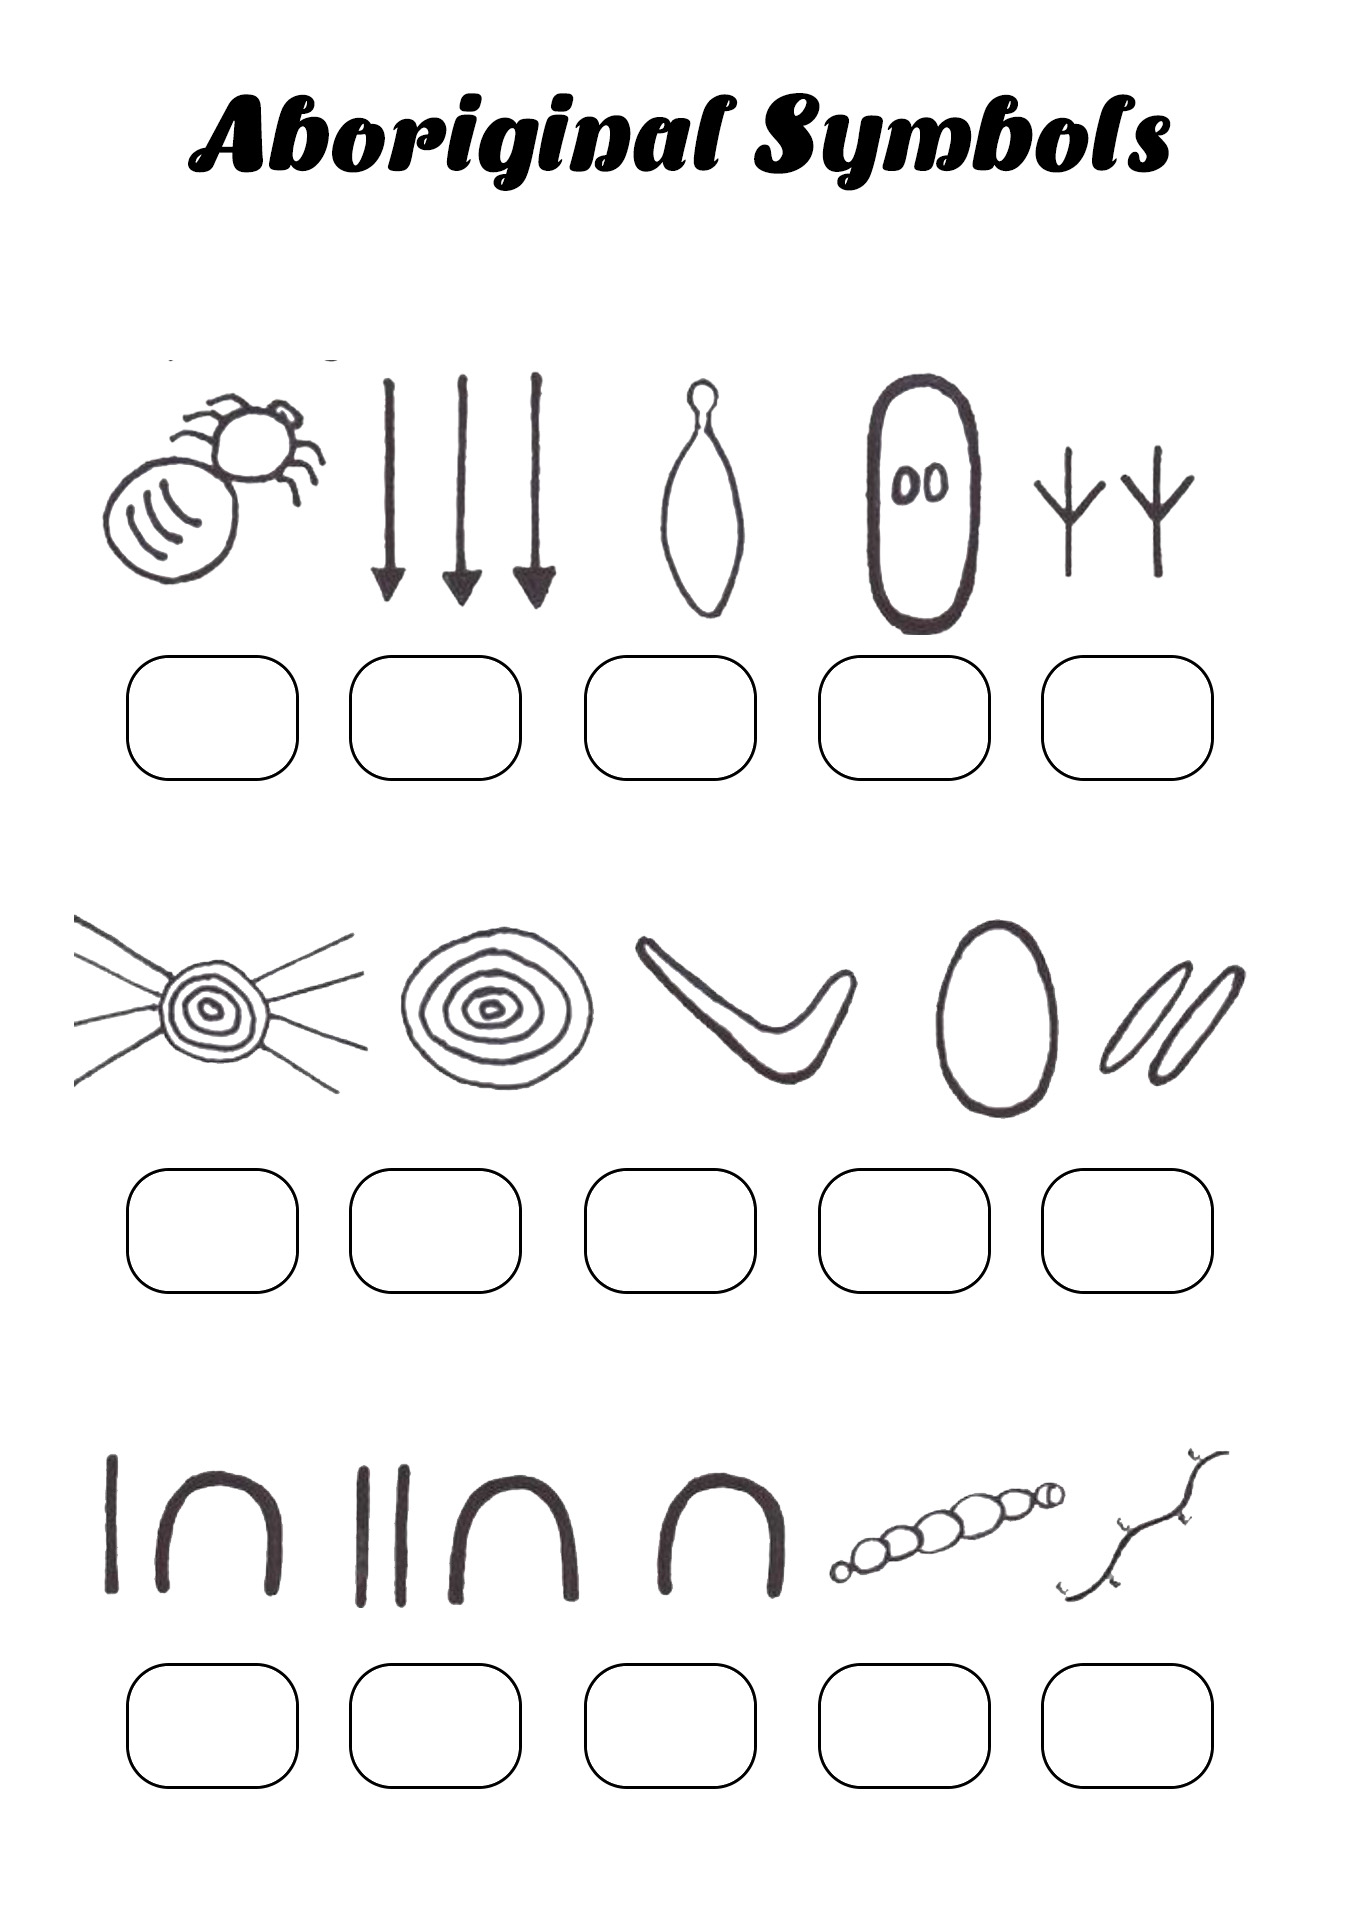 Aboriginal Art Symbols Worksheet Image